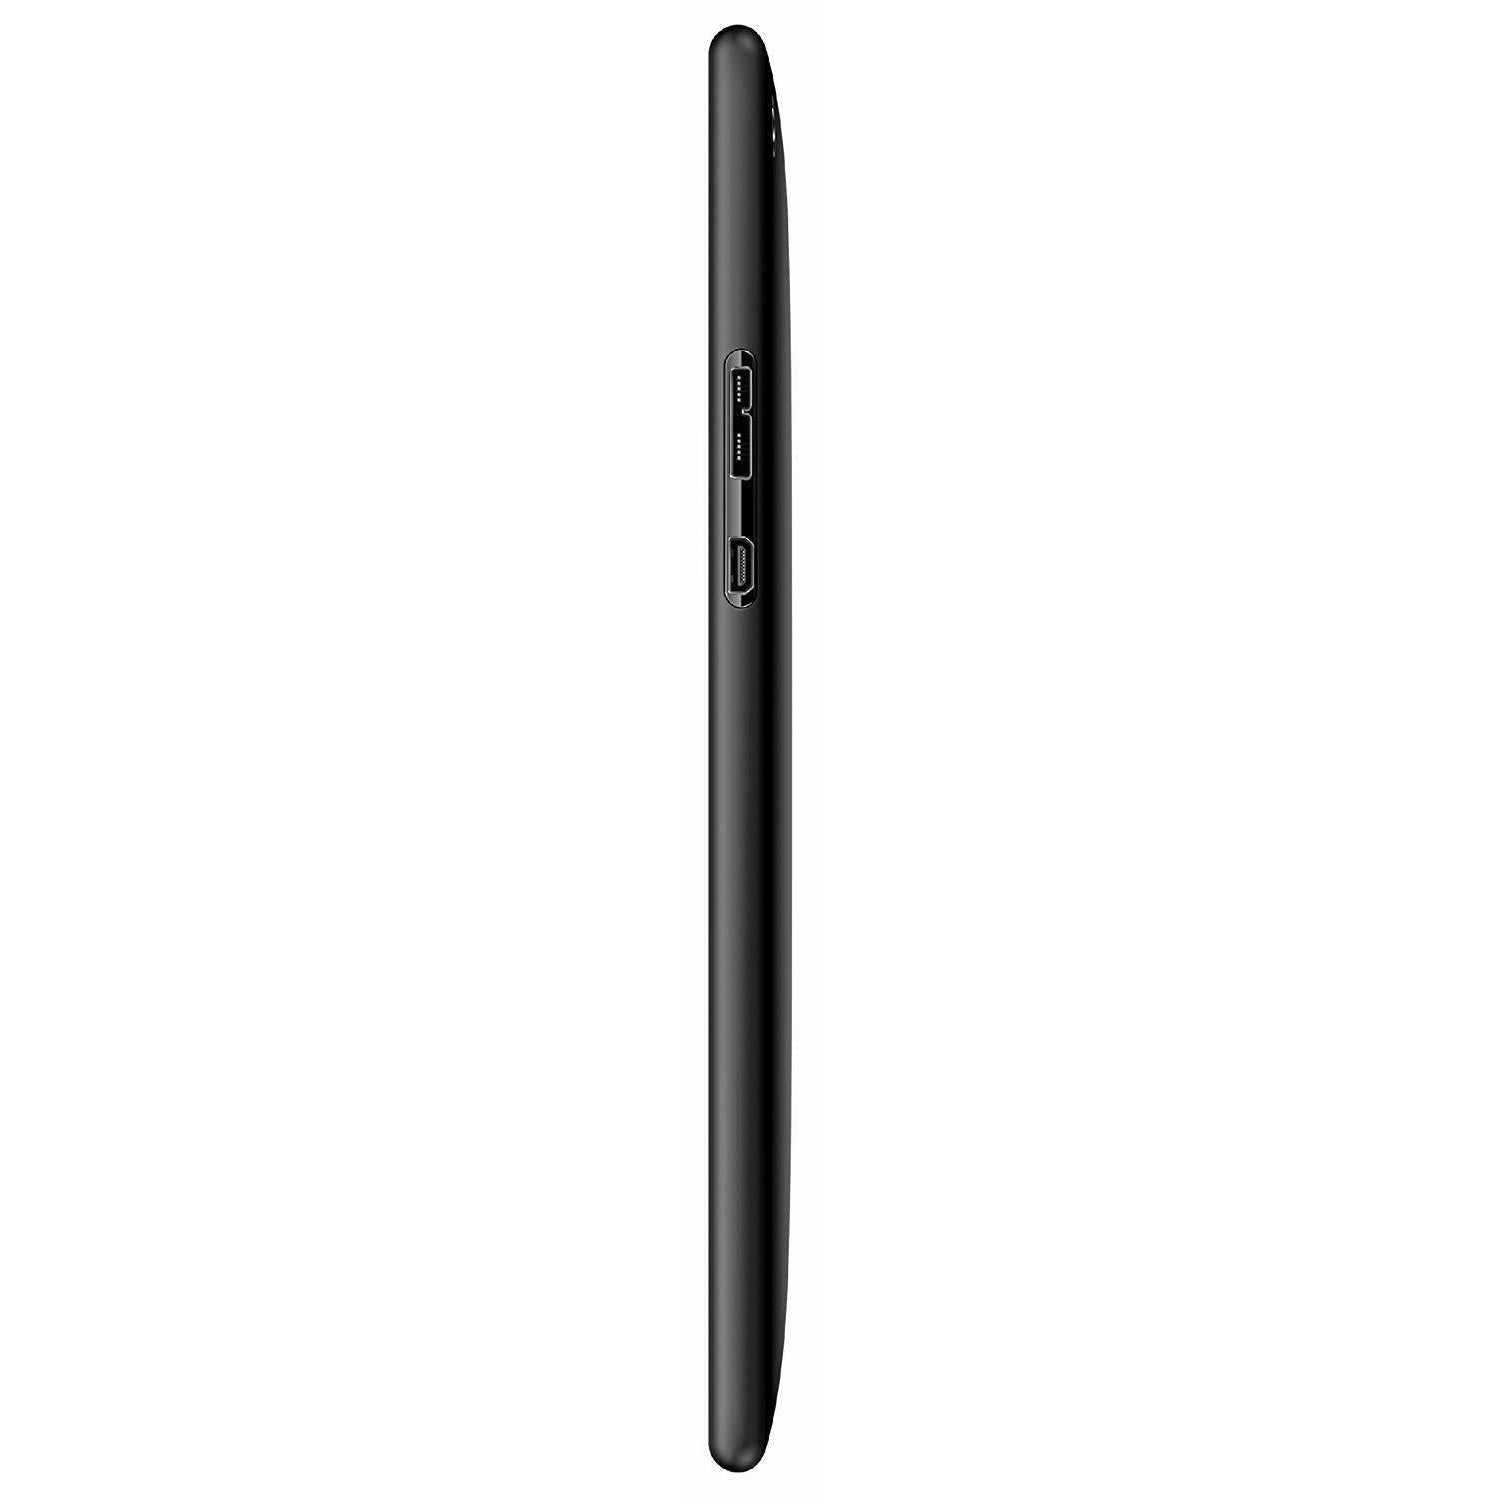 Nokia Lumia 2520 Tablet RX-113 10.1" 2GBRAM 32GB WIN 8.1RT TOUCHSCREEN (634848)